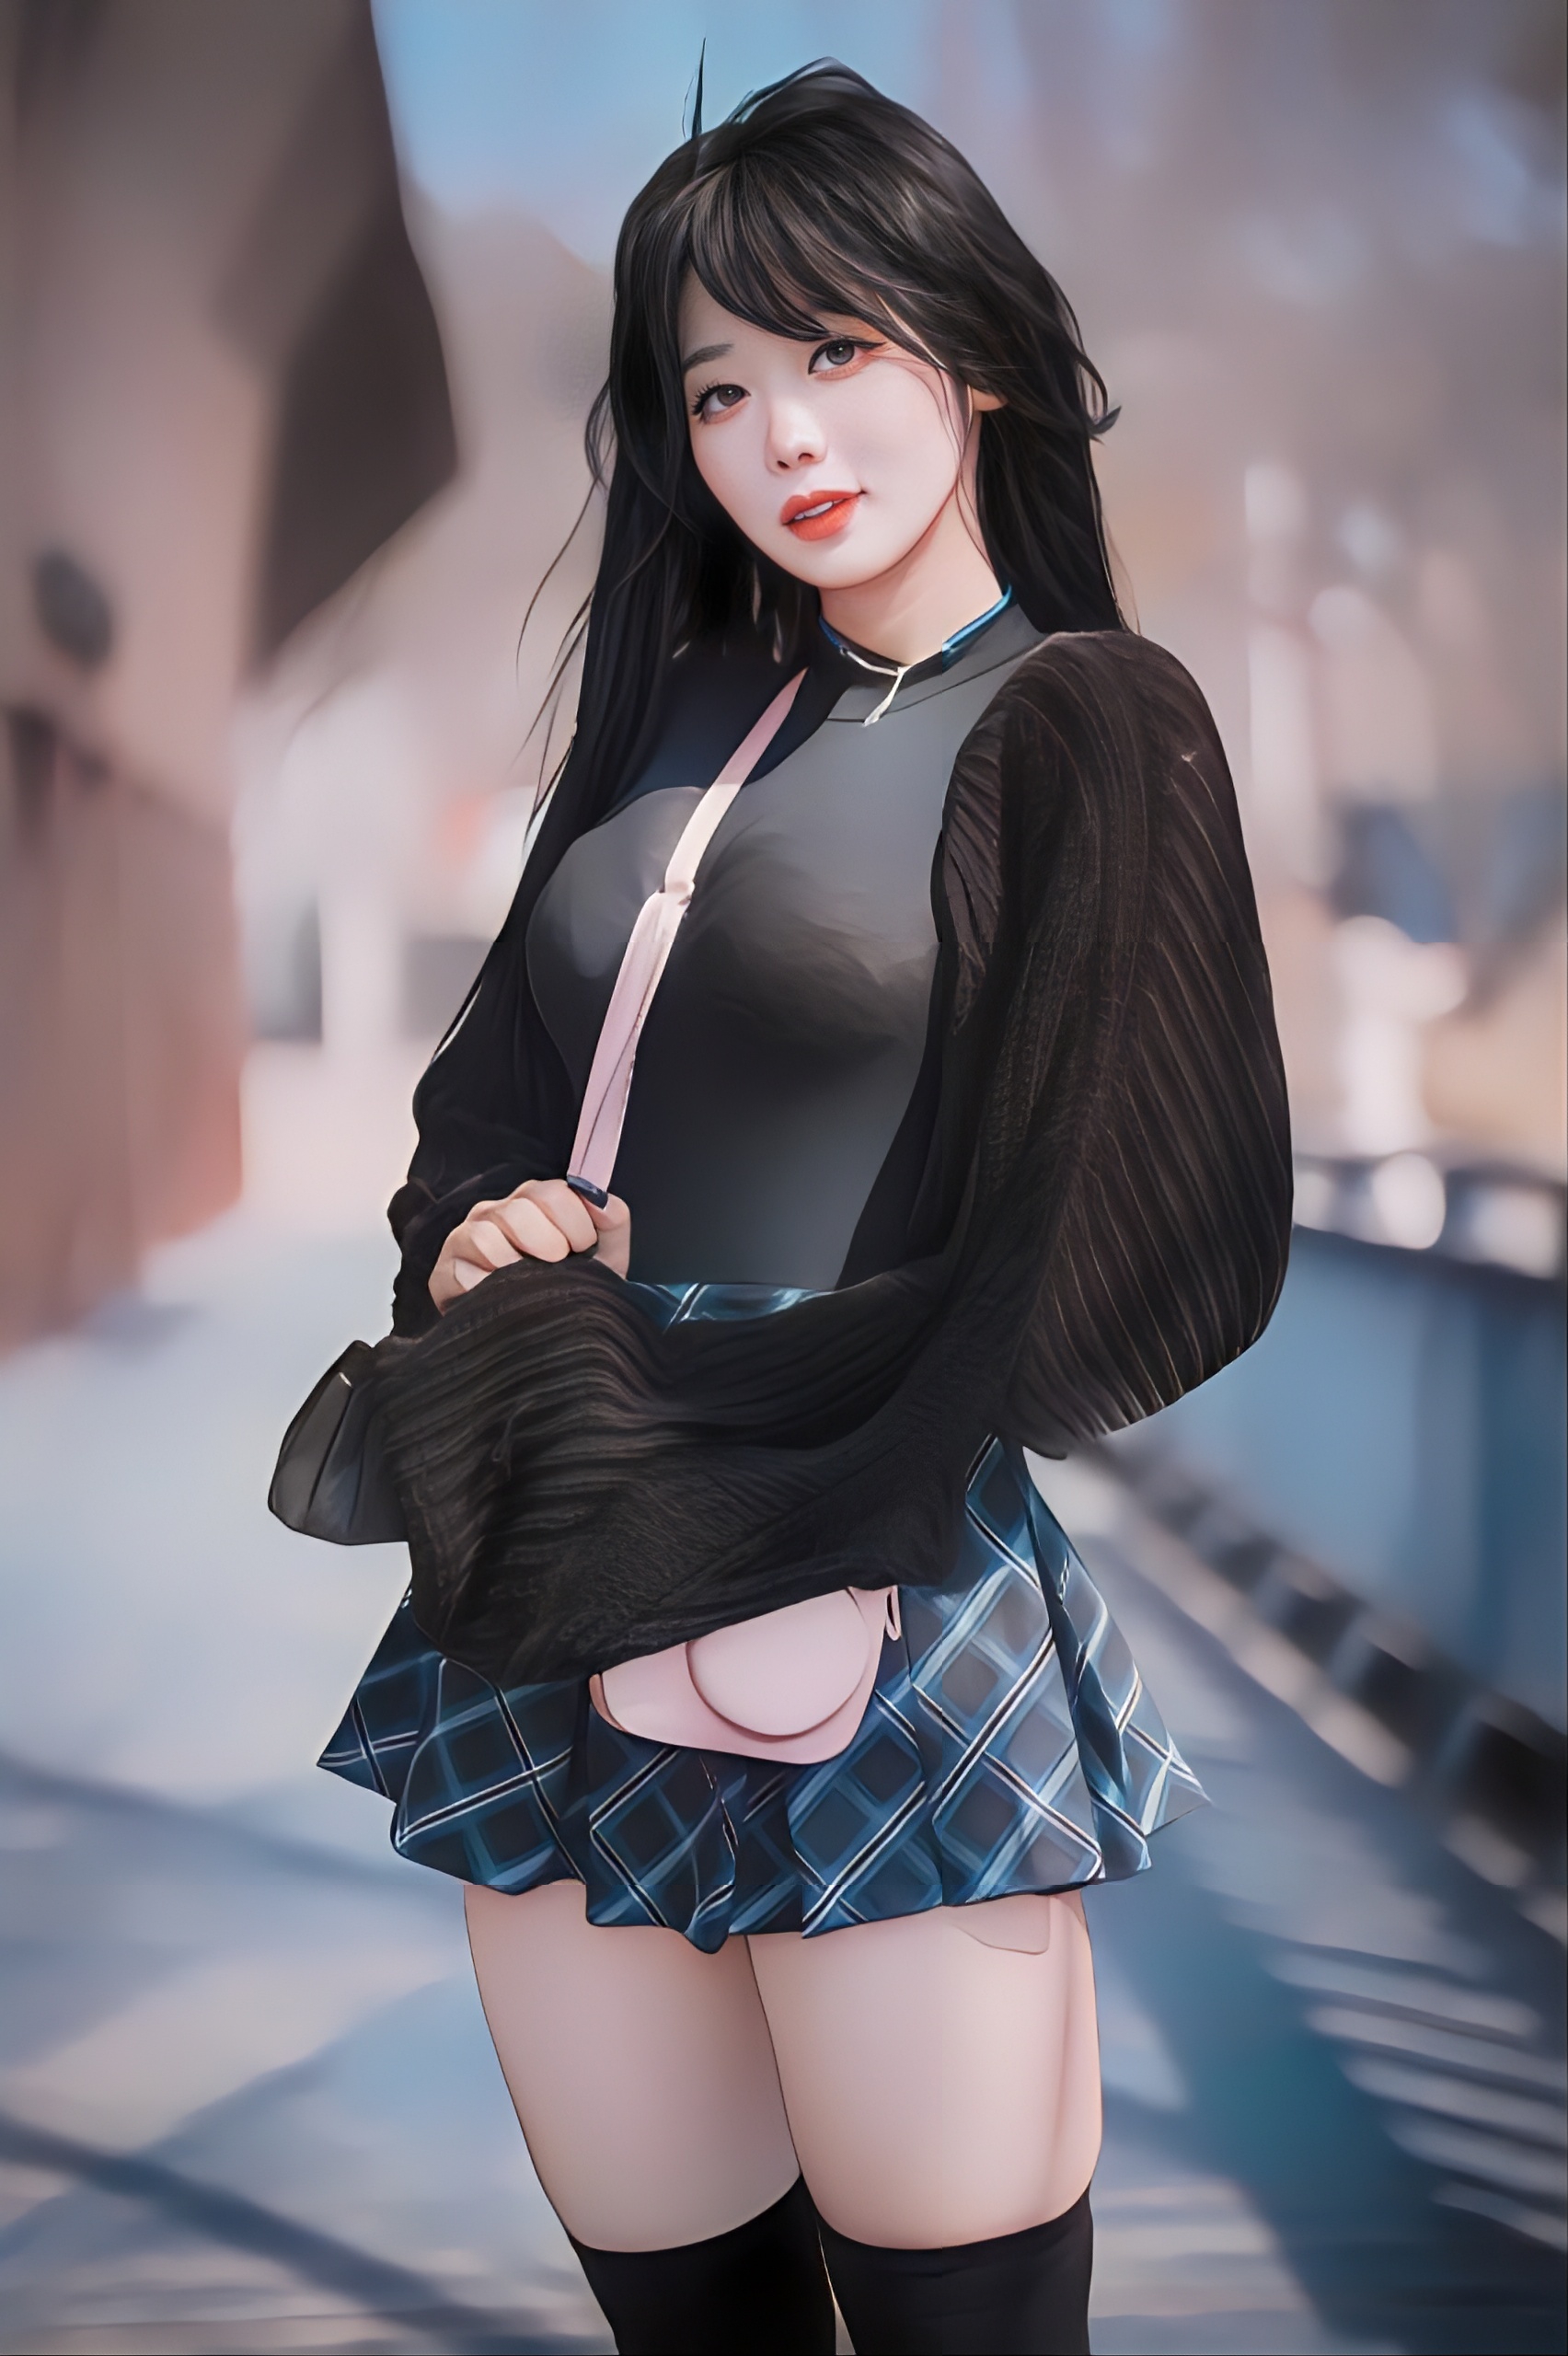 Model Bokeh Asian Skirt Women Vertical Purse Photoshopped 1704x2560